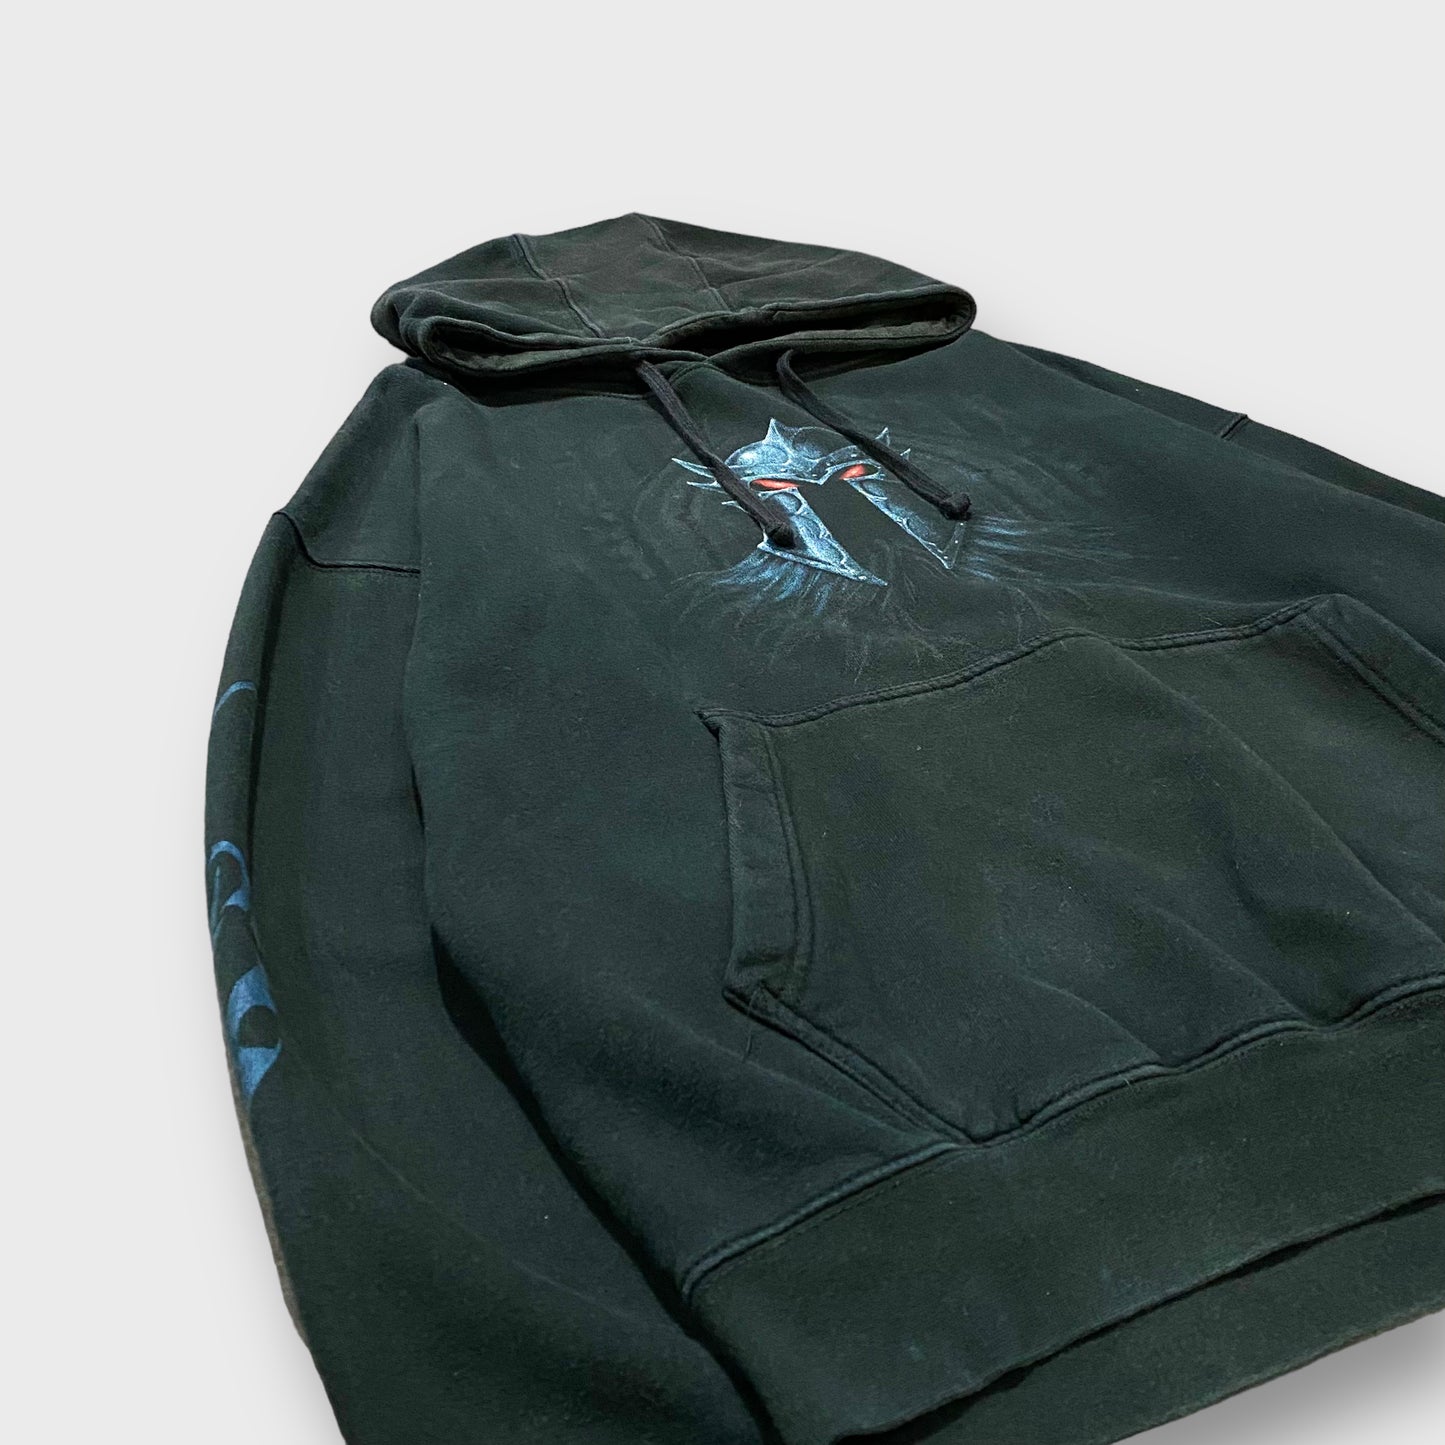 Knight design hoodie